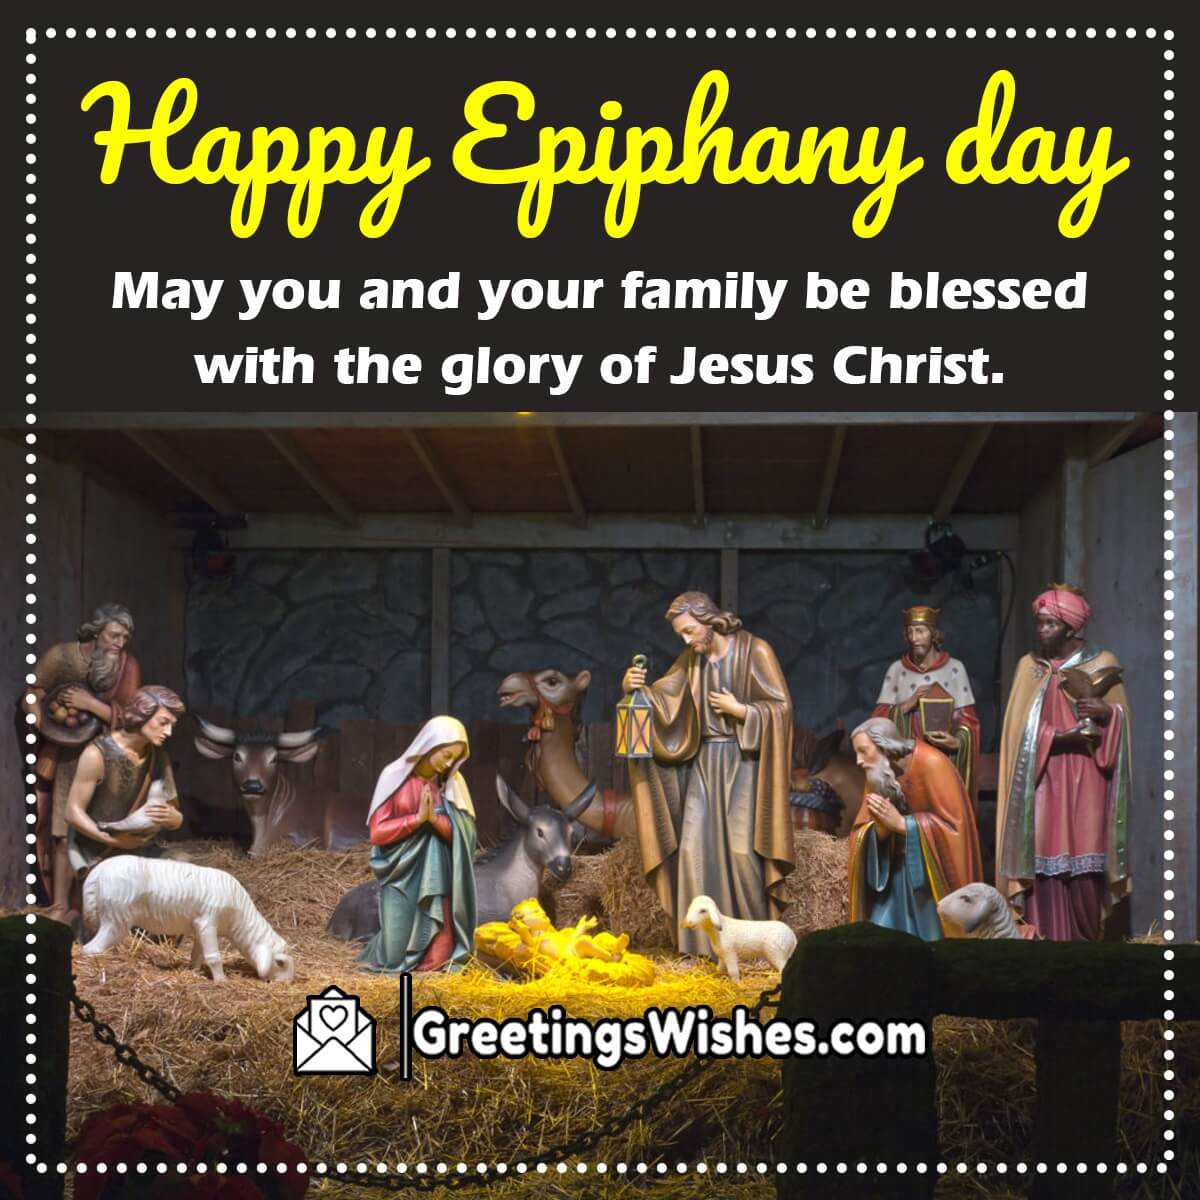 Happy Epiphany Day Wish